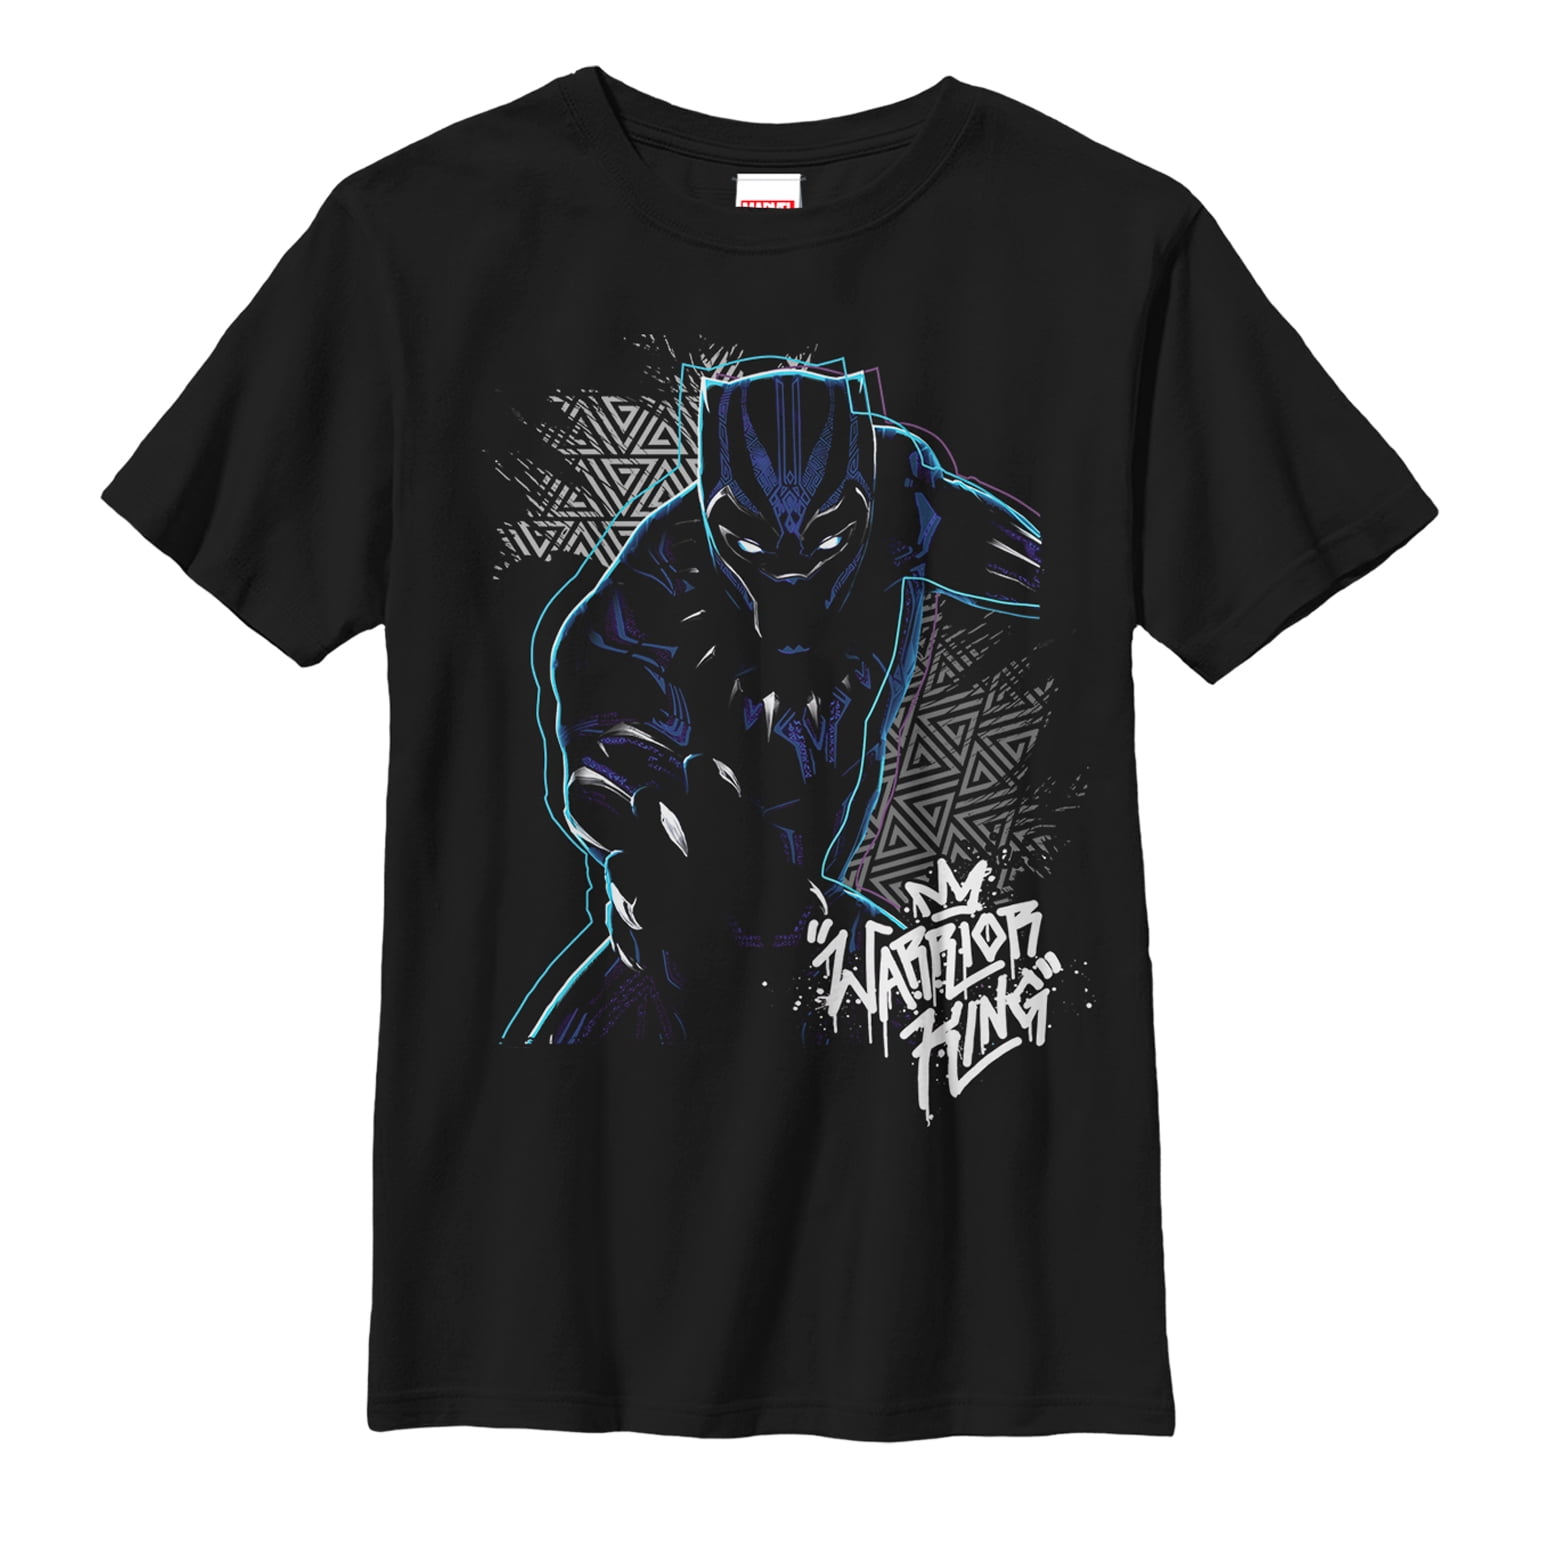 Boy S Marvel Black Panther Triangle Pattern Graphic Tee Black X Large Walmart Com